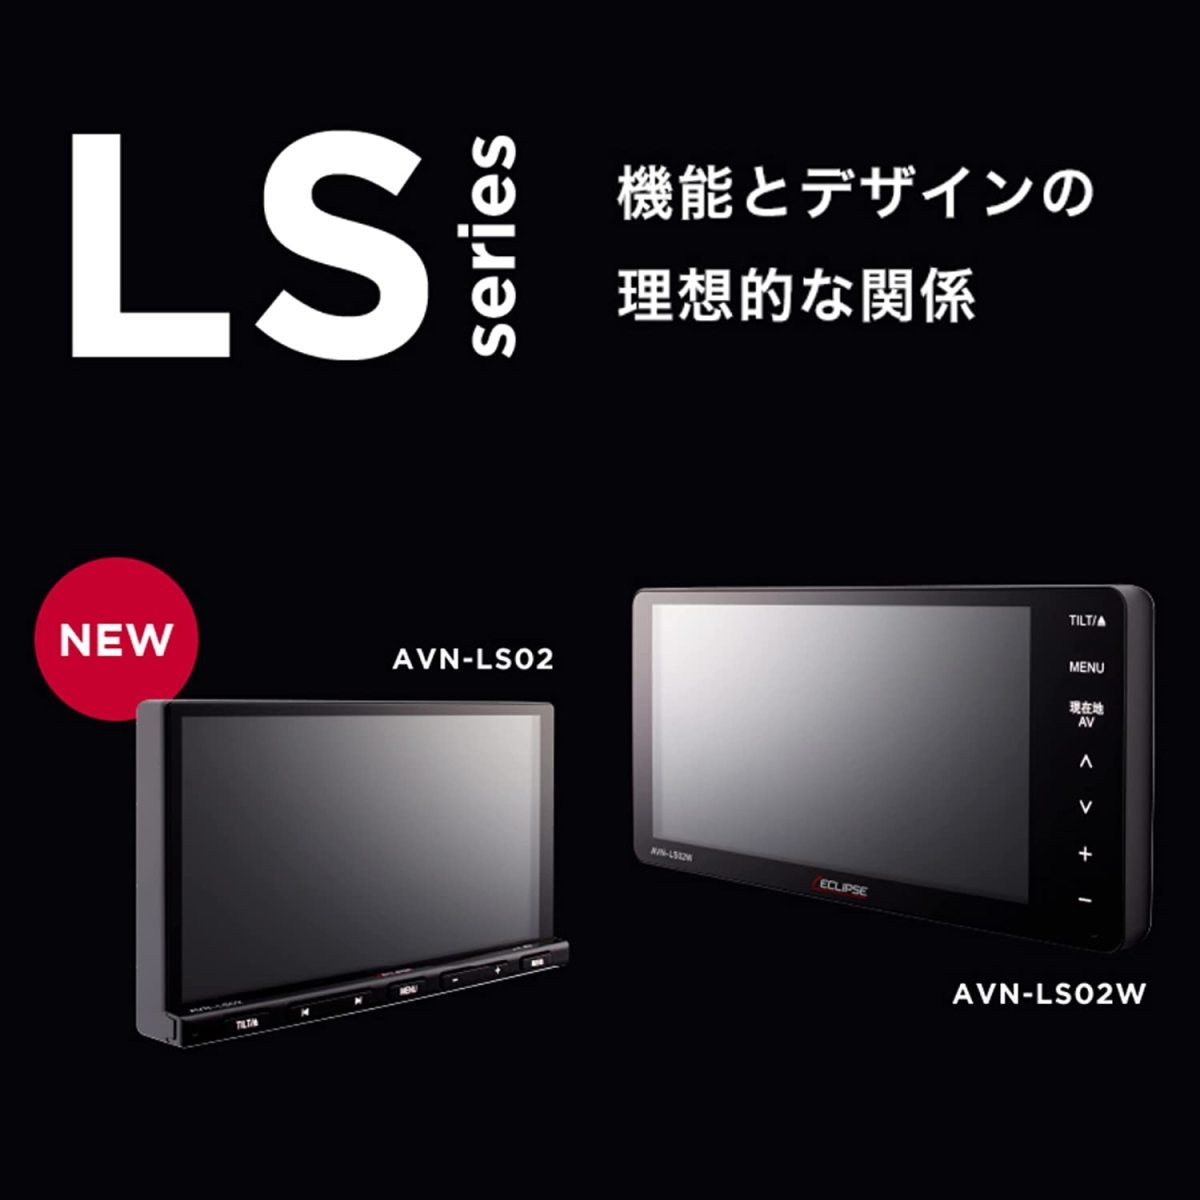 AVN-LS02＋バックカメラセット 代引手数料無料 新品 2DIN 地デジ DVD CD Bluetooth 多言語:英語,中国語,韓国語に対応 カーナビ_画像3